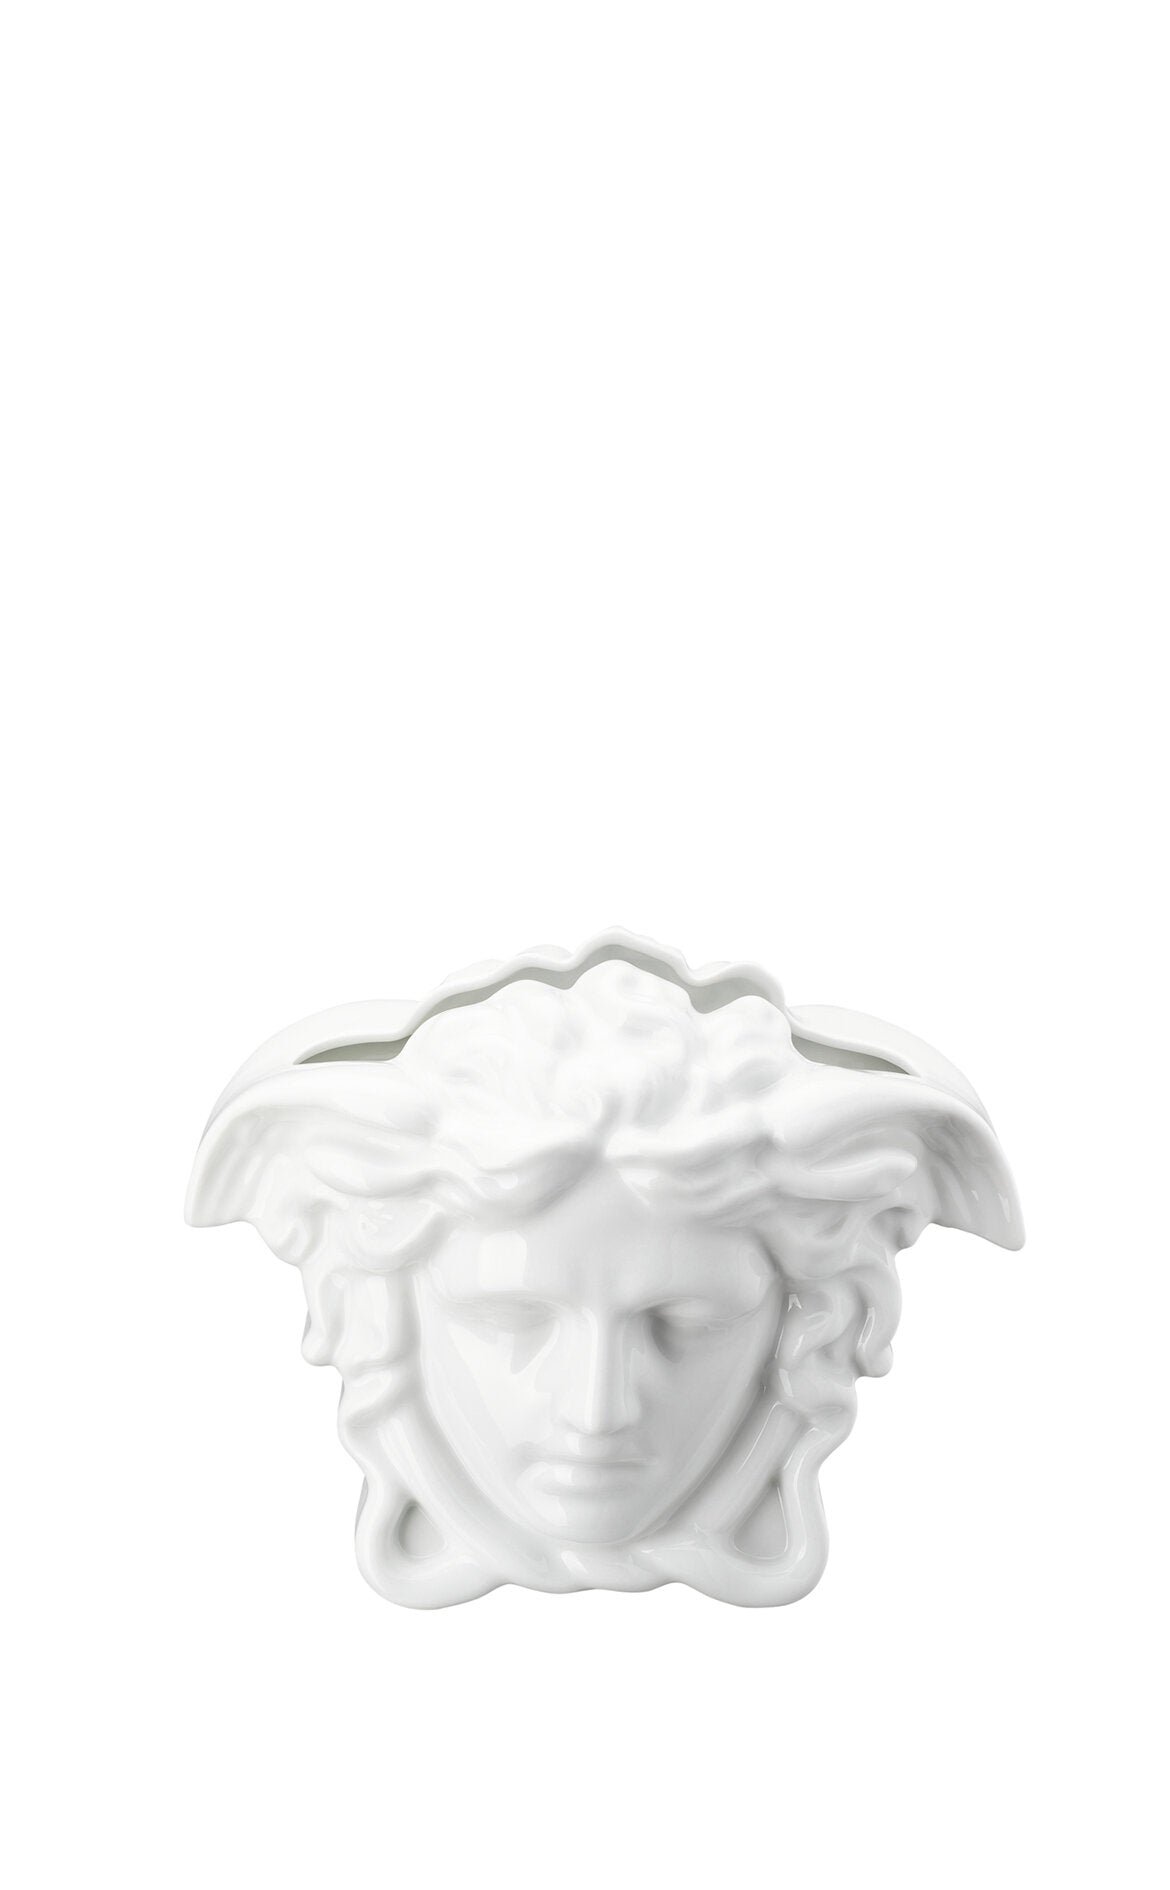 VERSACE Medusa Grande Beyaz Porselen Vazo 21 cm D’Maison 